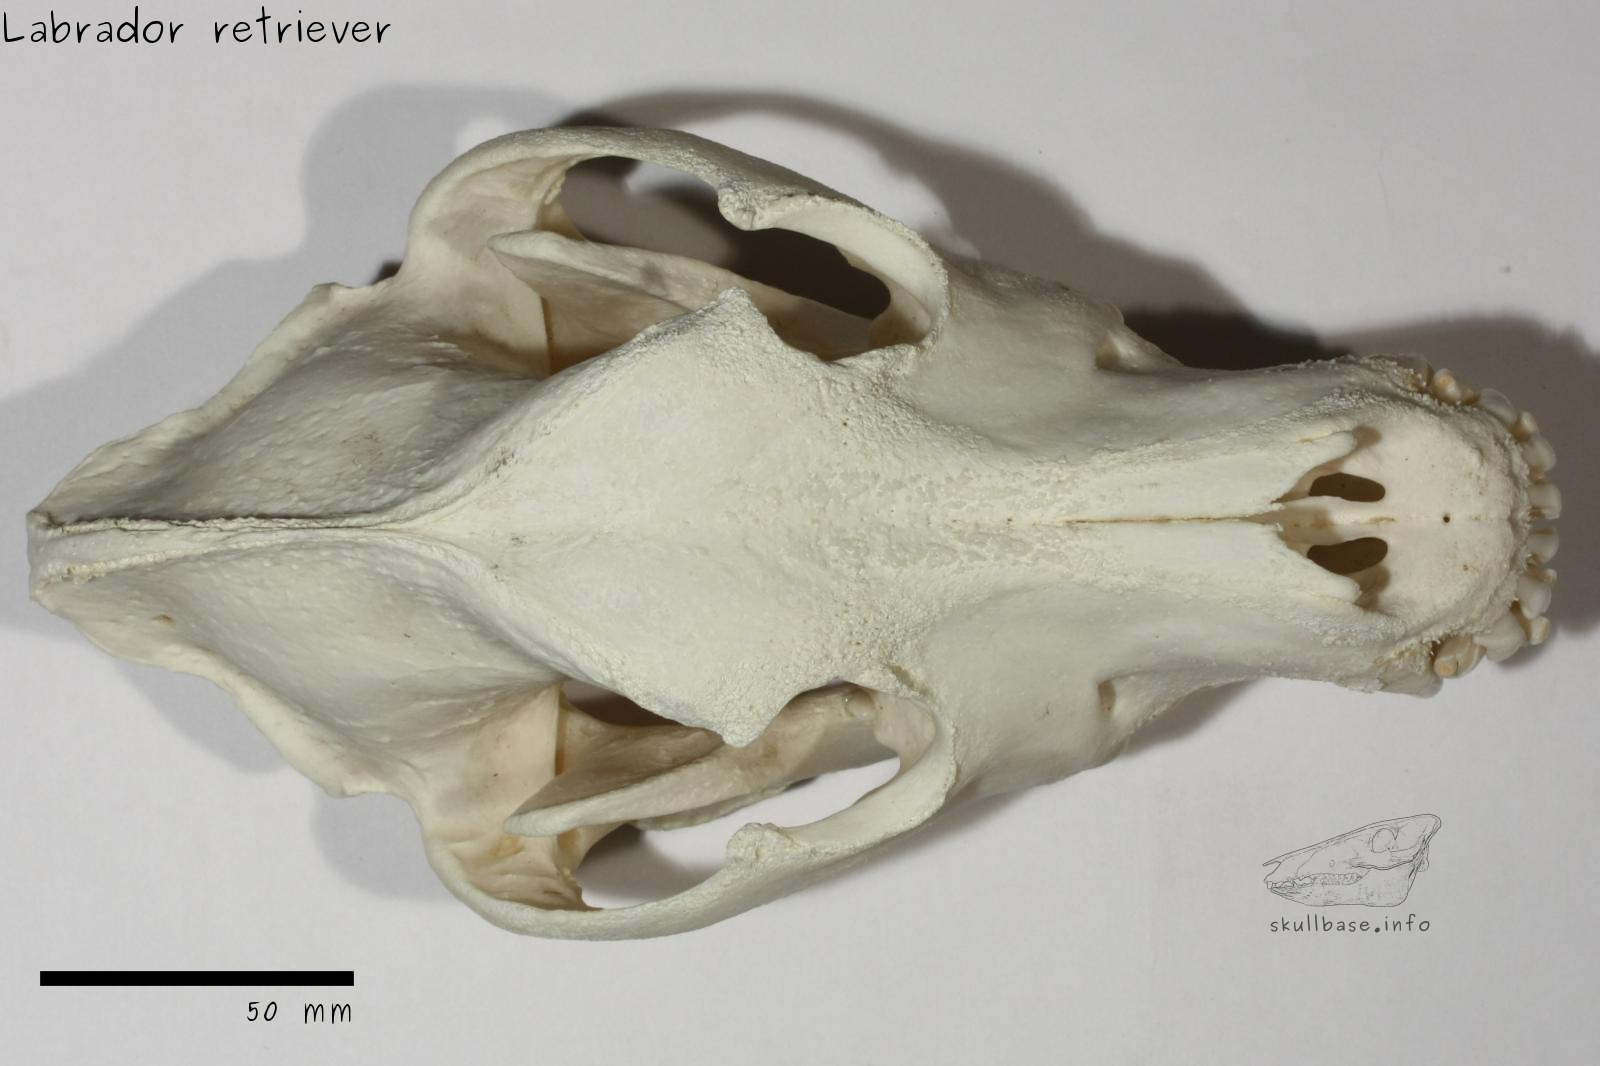 Labrador retriever (Canis lupus familiaris) skull dorsal view